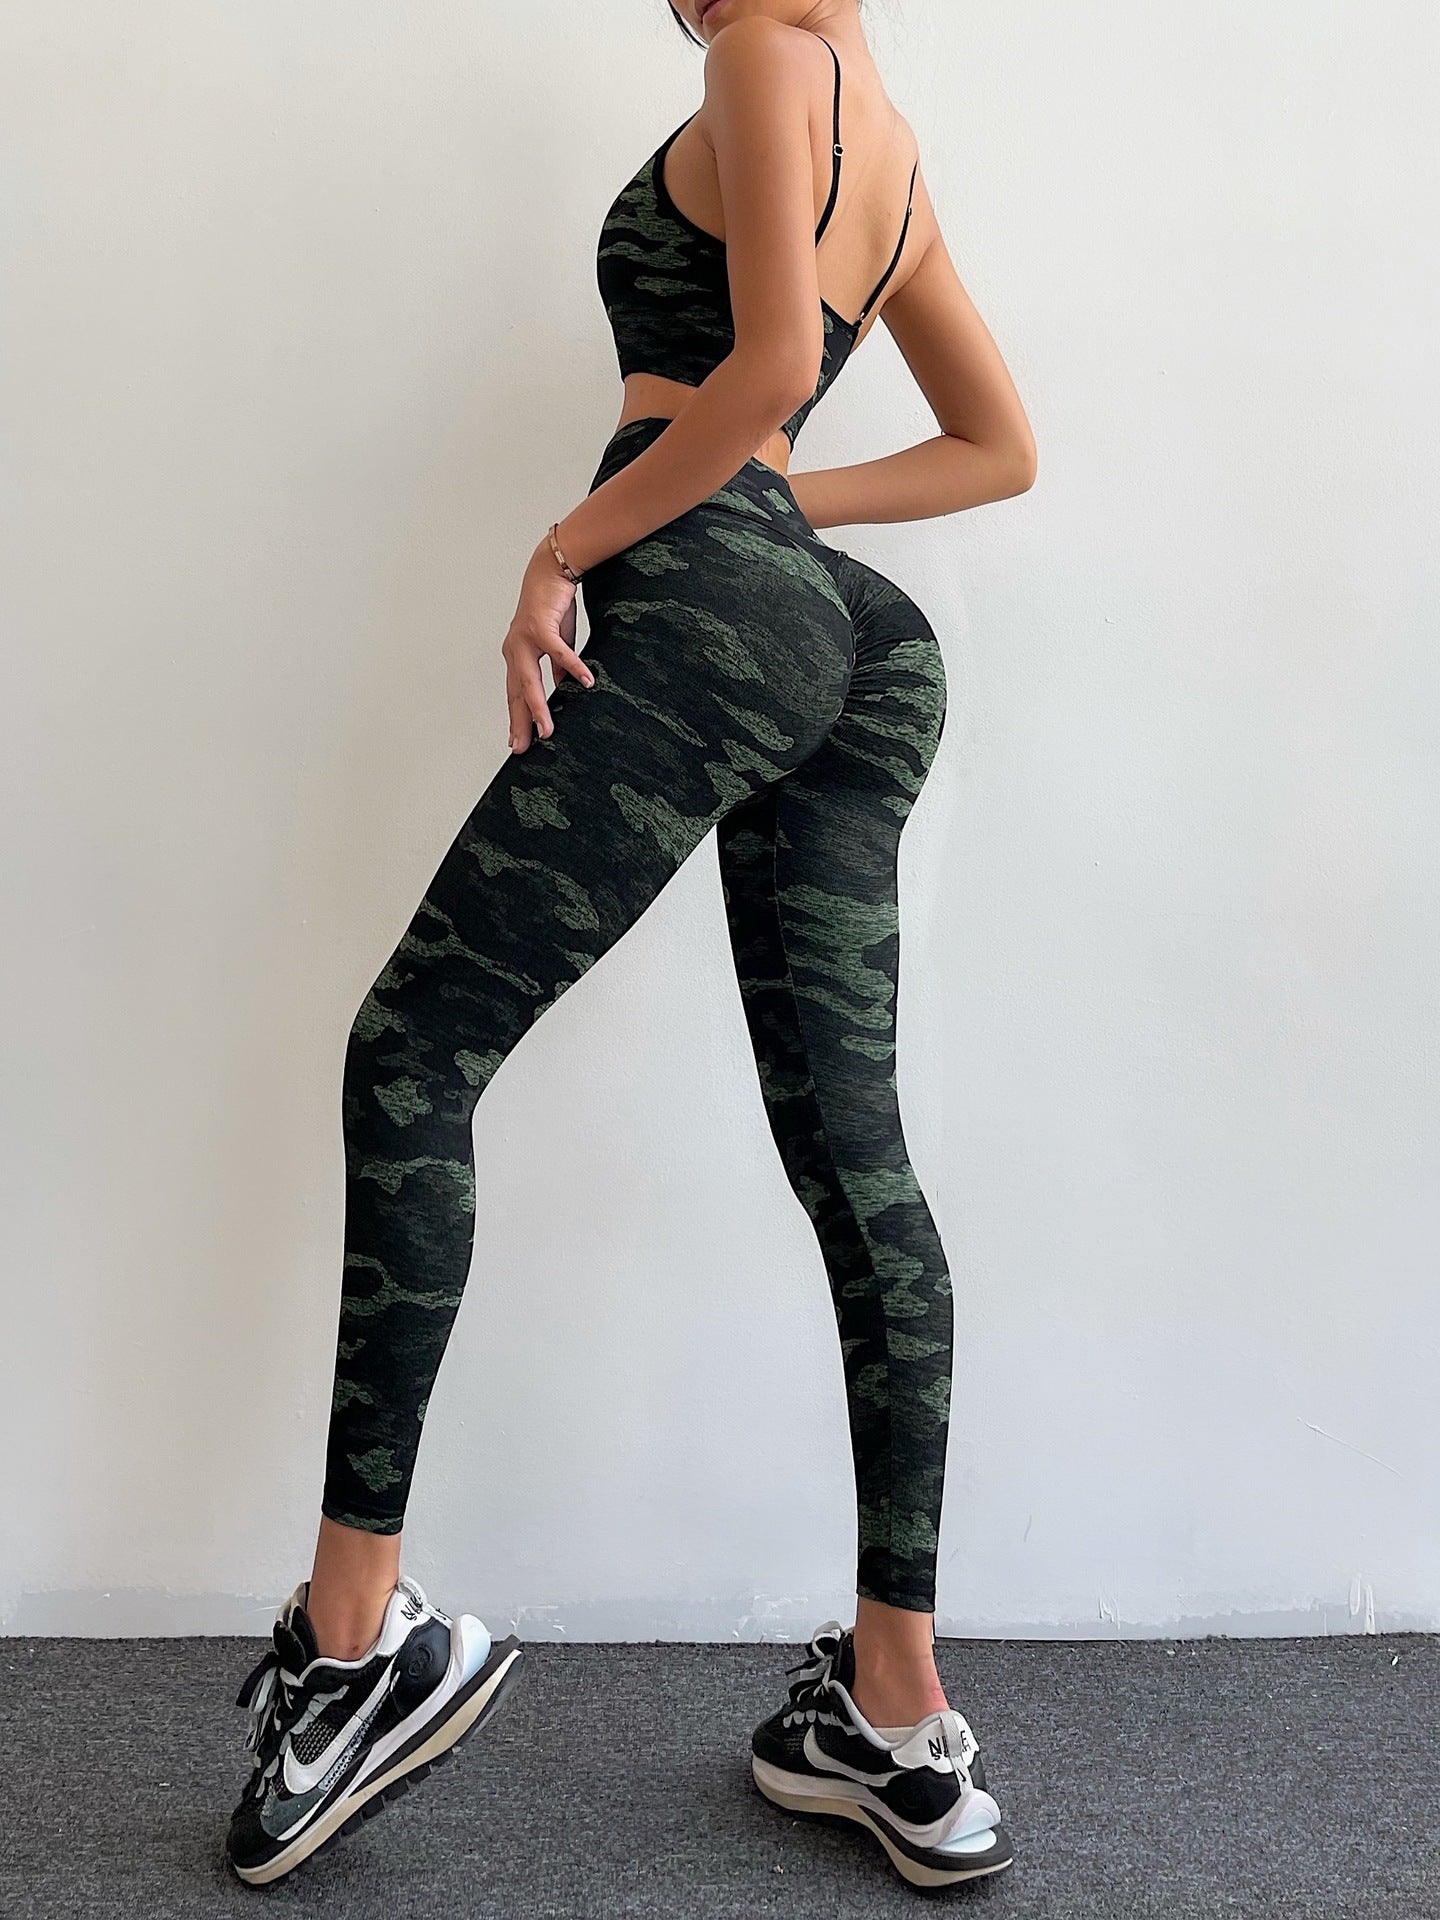 Women Sexy High Waist Camouflage Yoga Leggings-Pants-Green-S 45-50kg-Free Shipping Leatheretro